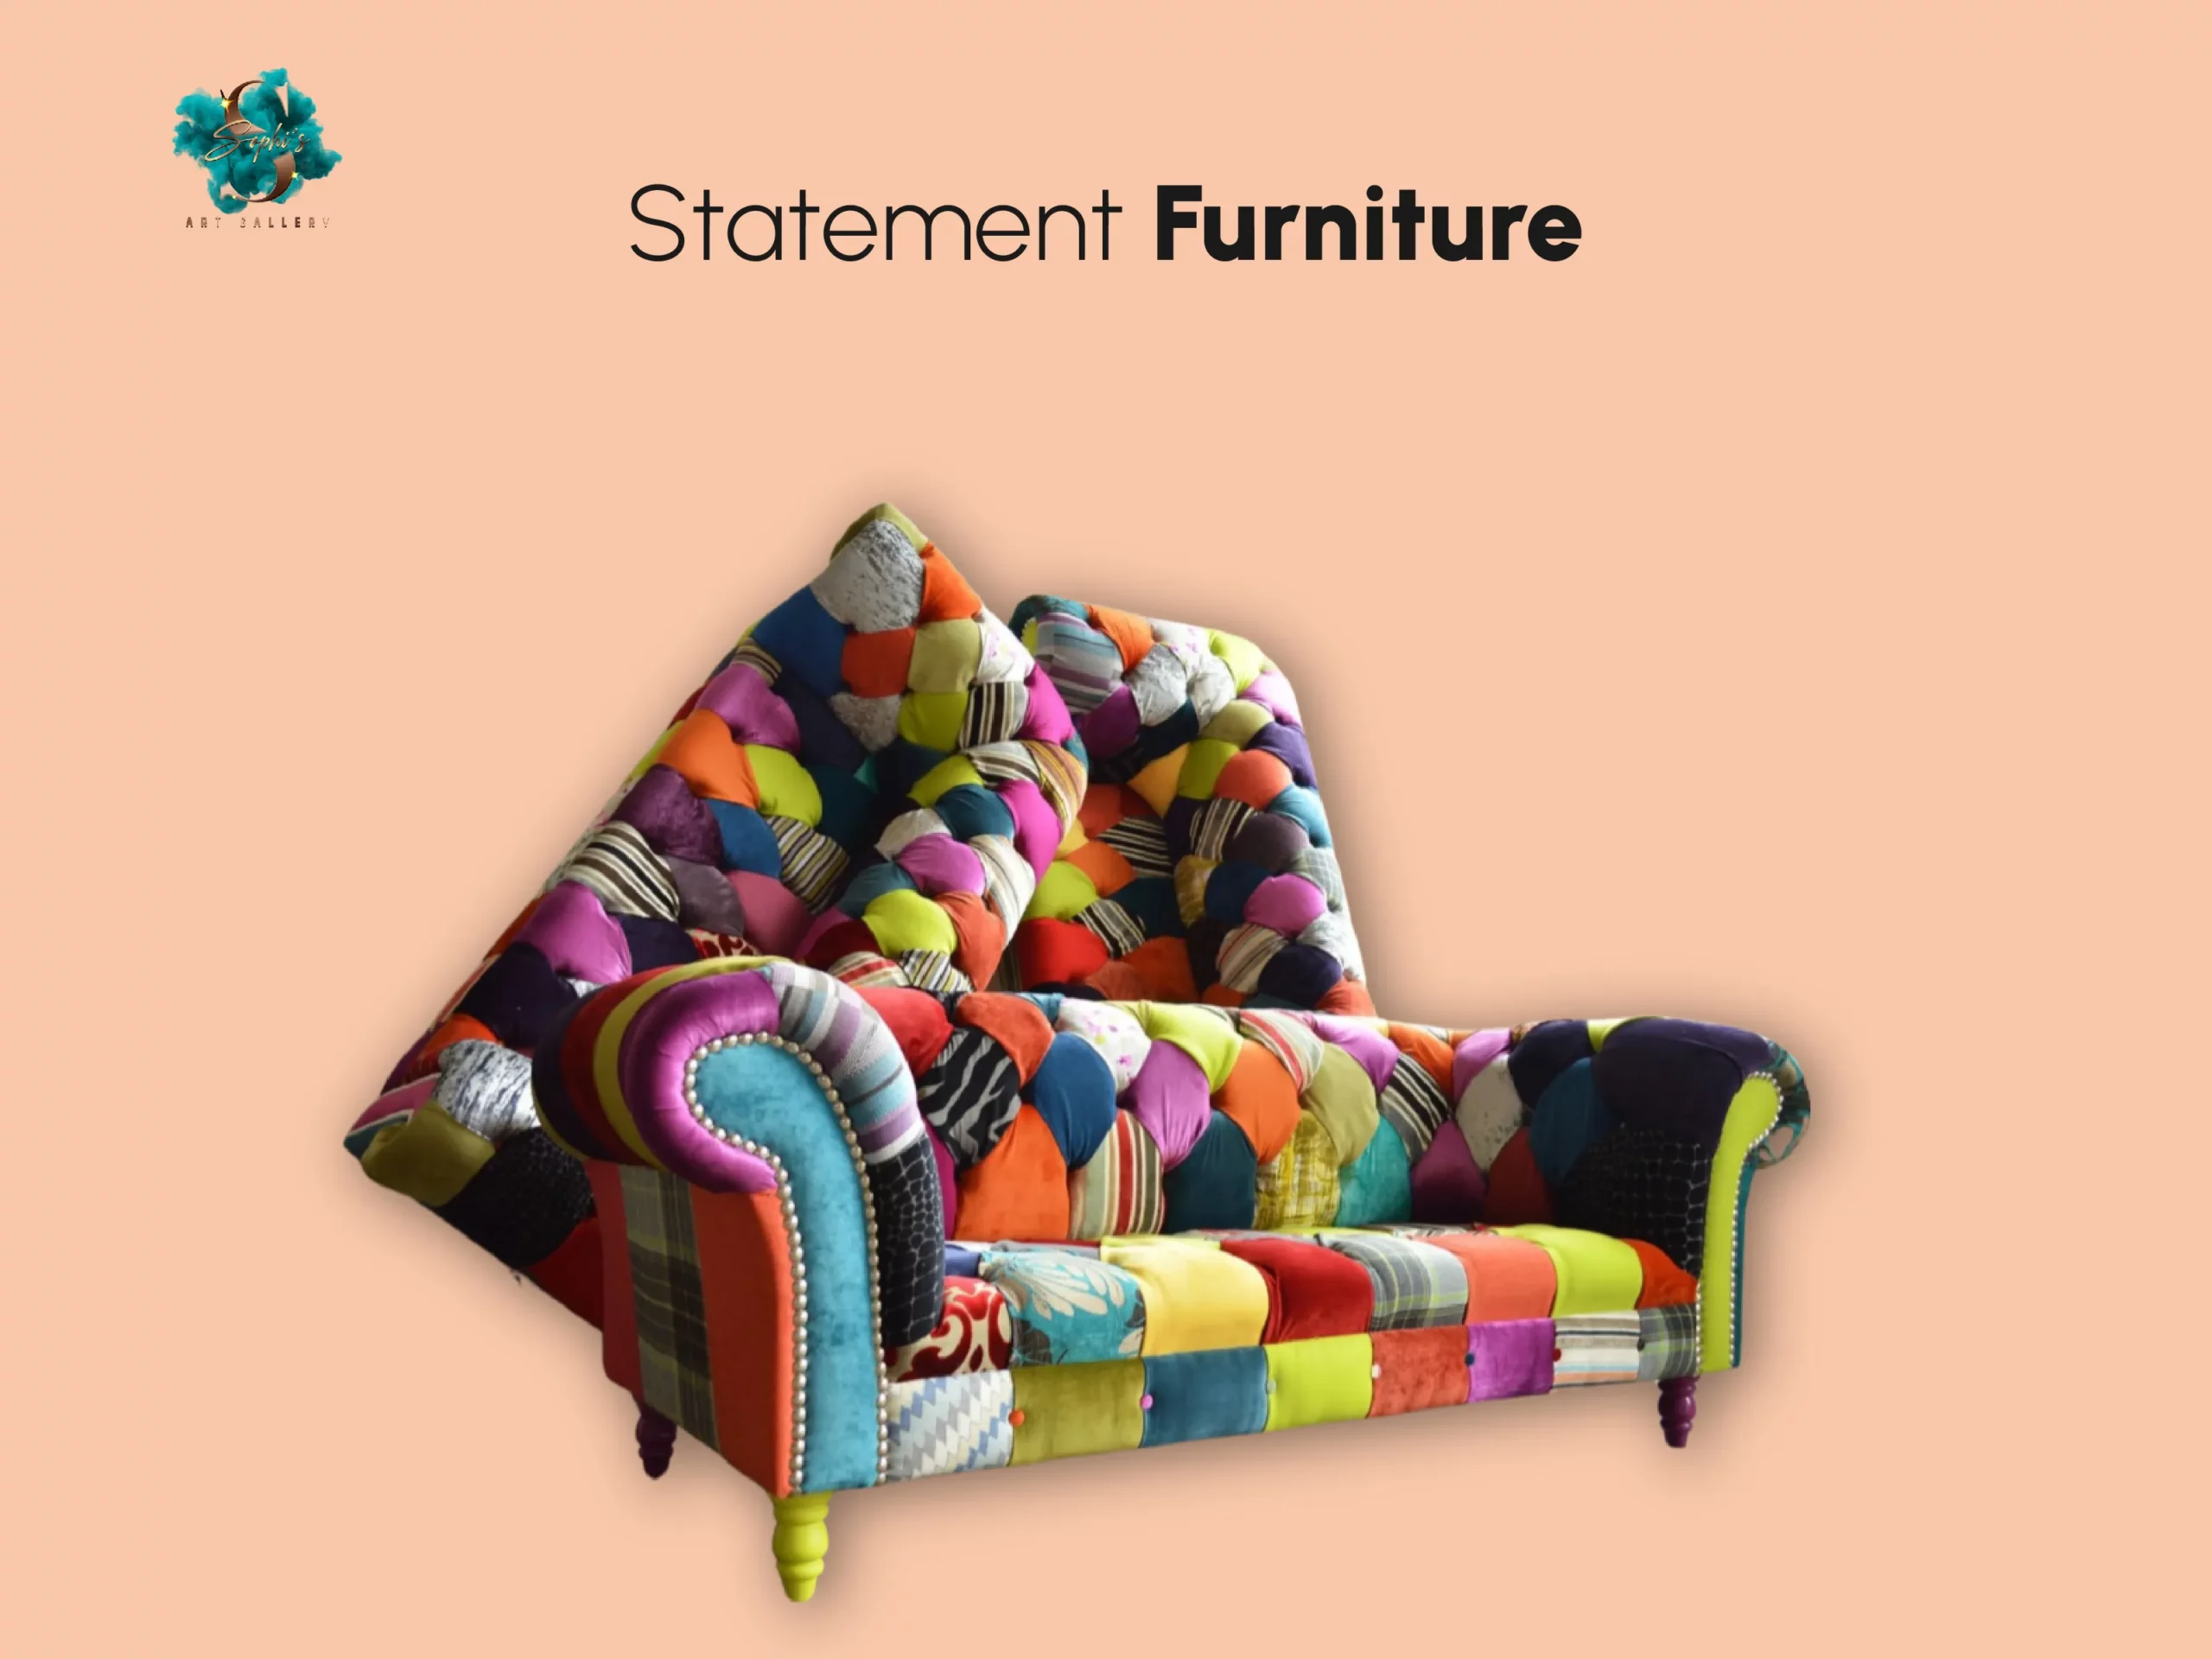 Statement furniture